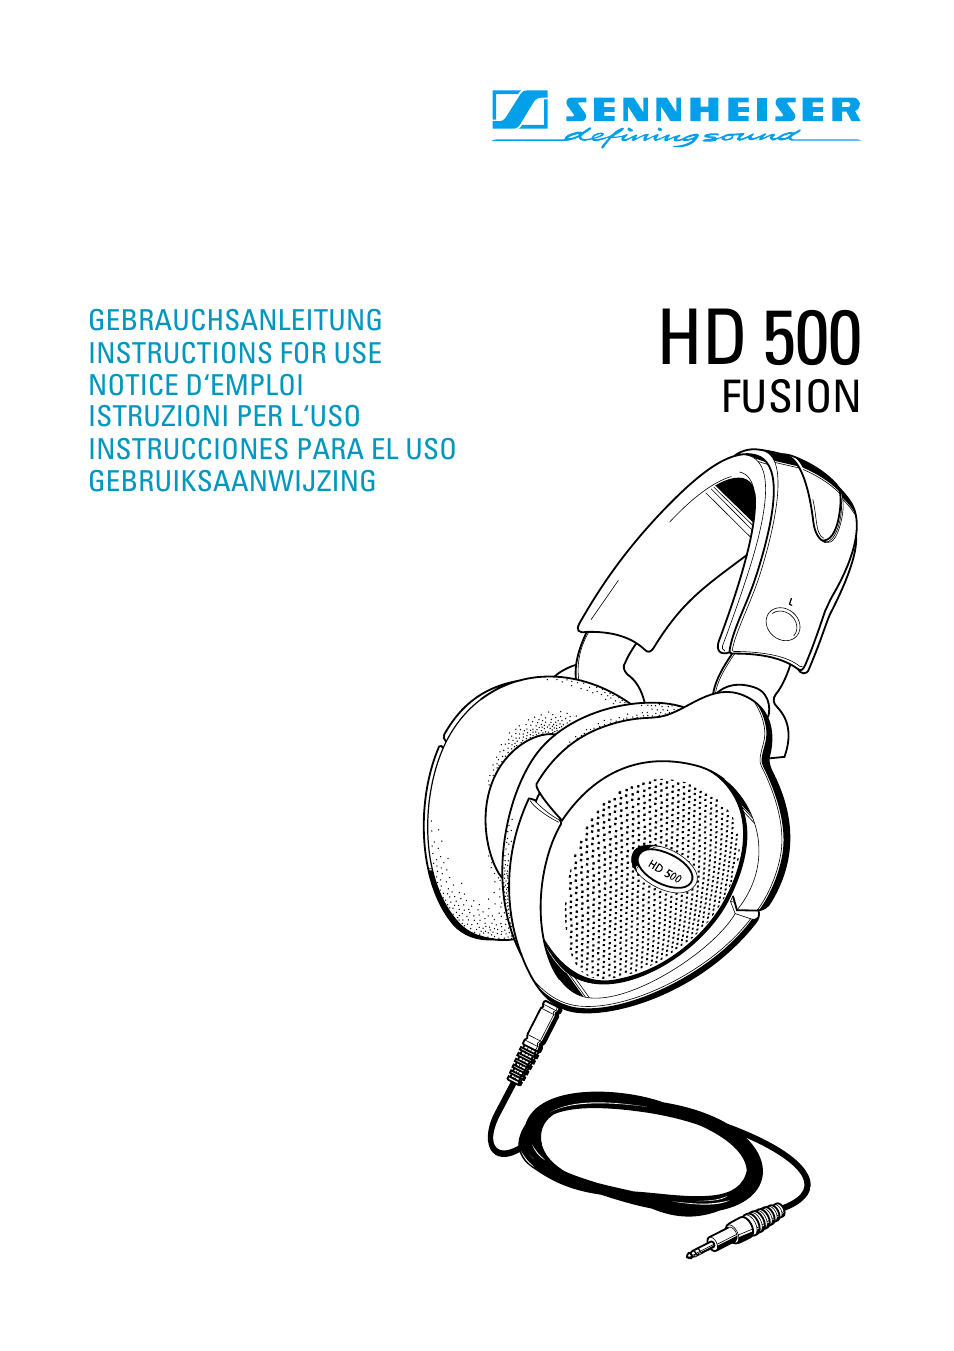 FUSION HD 500